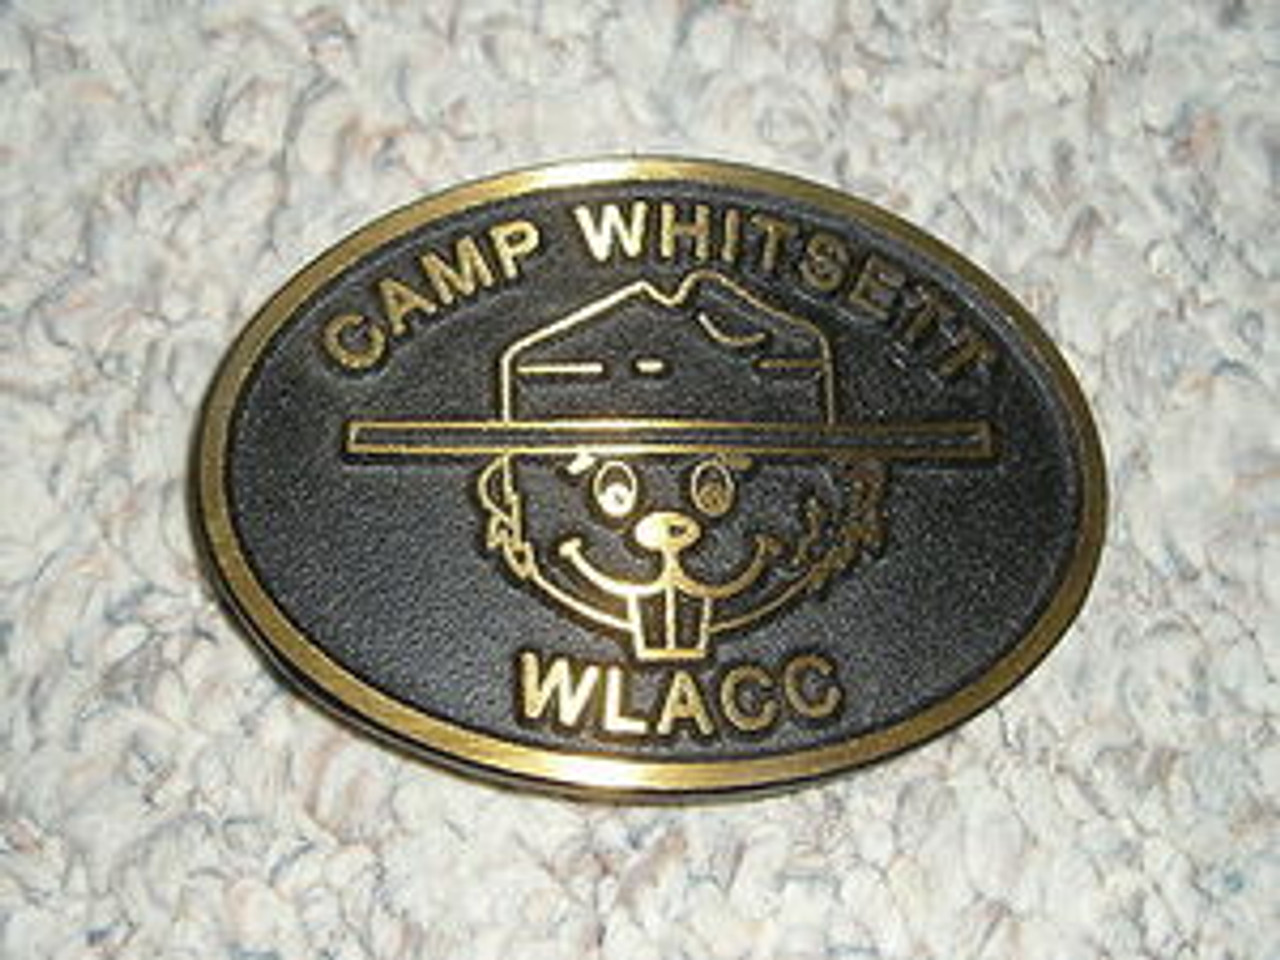 1990's Camp Whitsett Bronze Belt Buckle - Scout